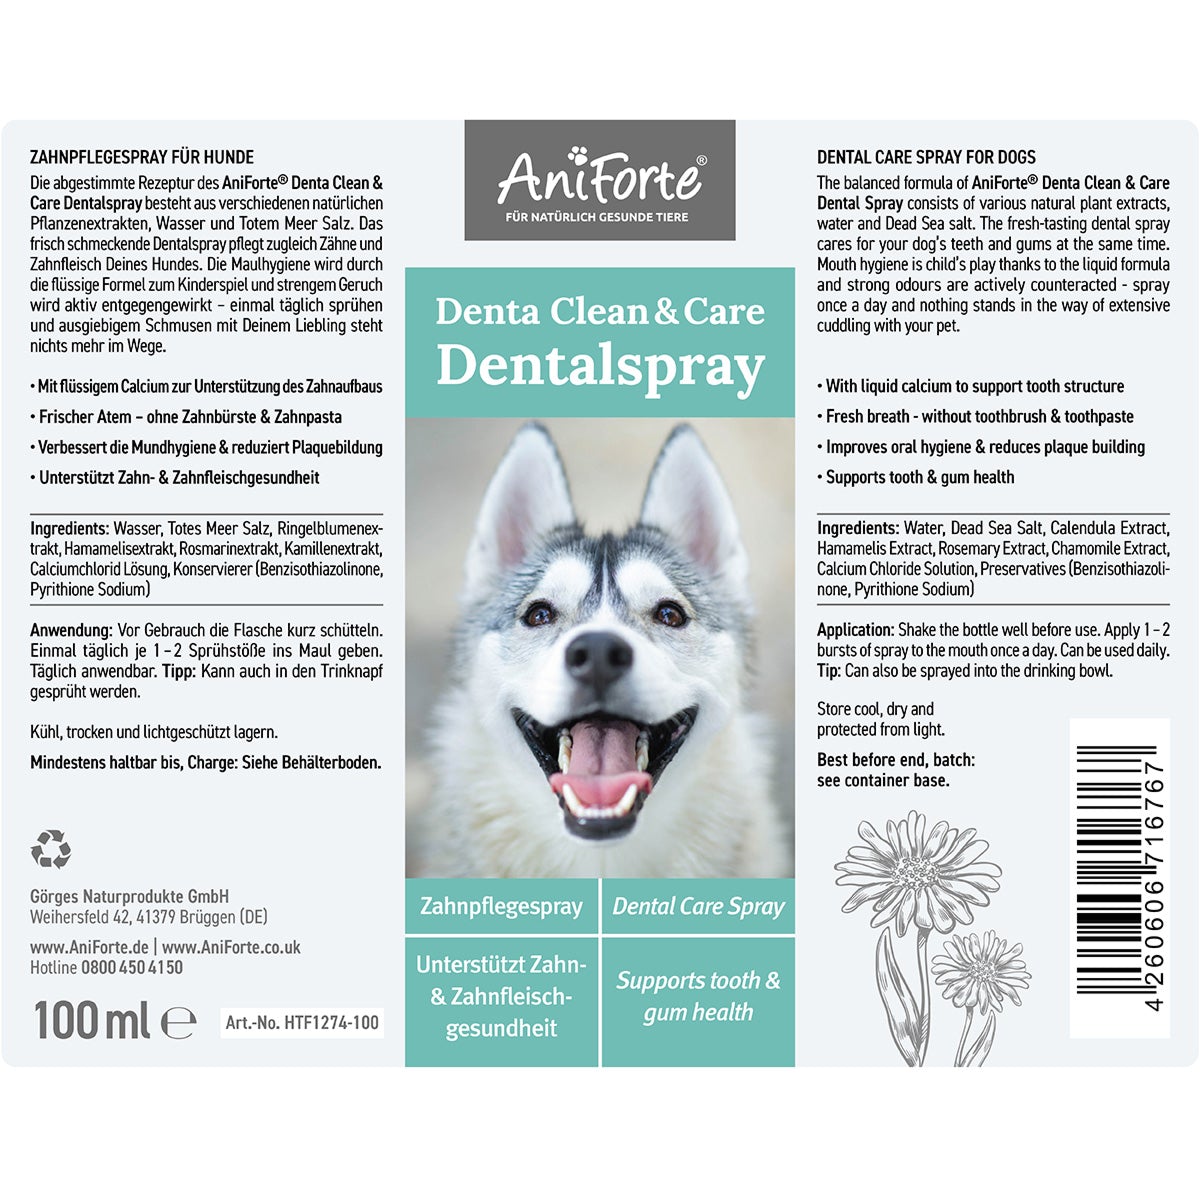 Denta Clean & Care Dentalspray